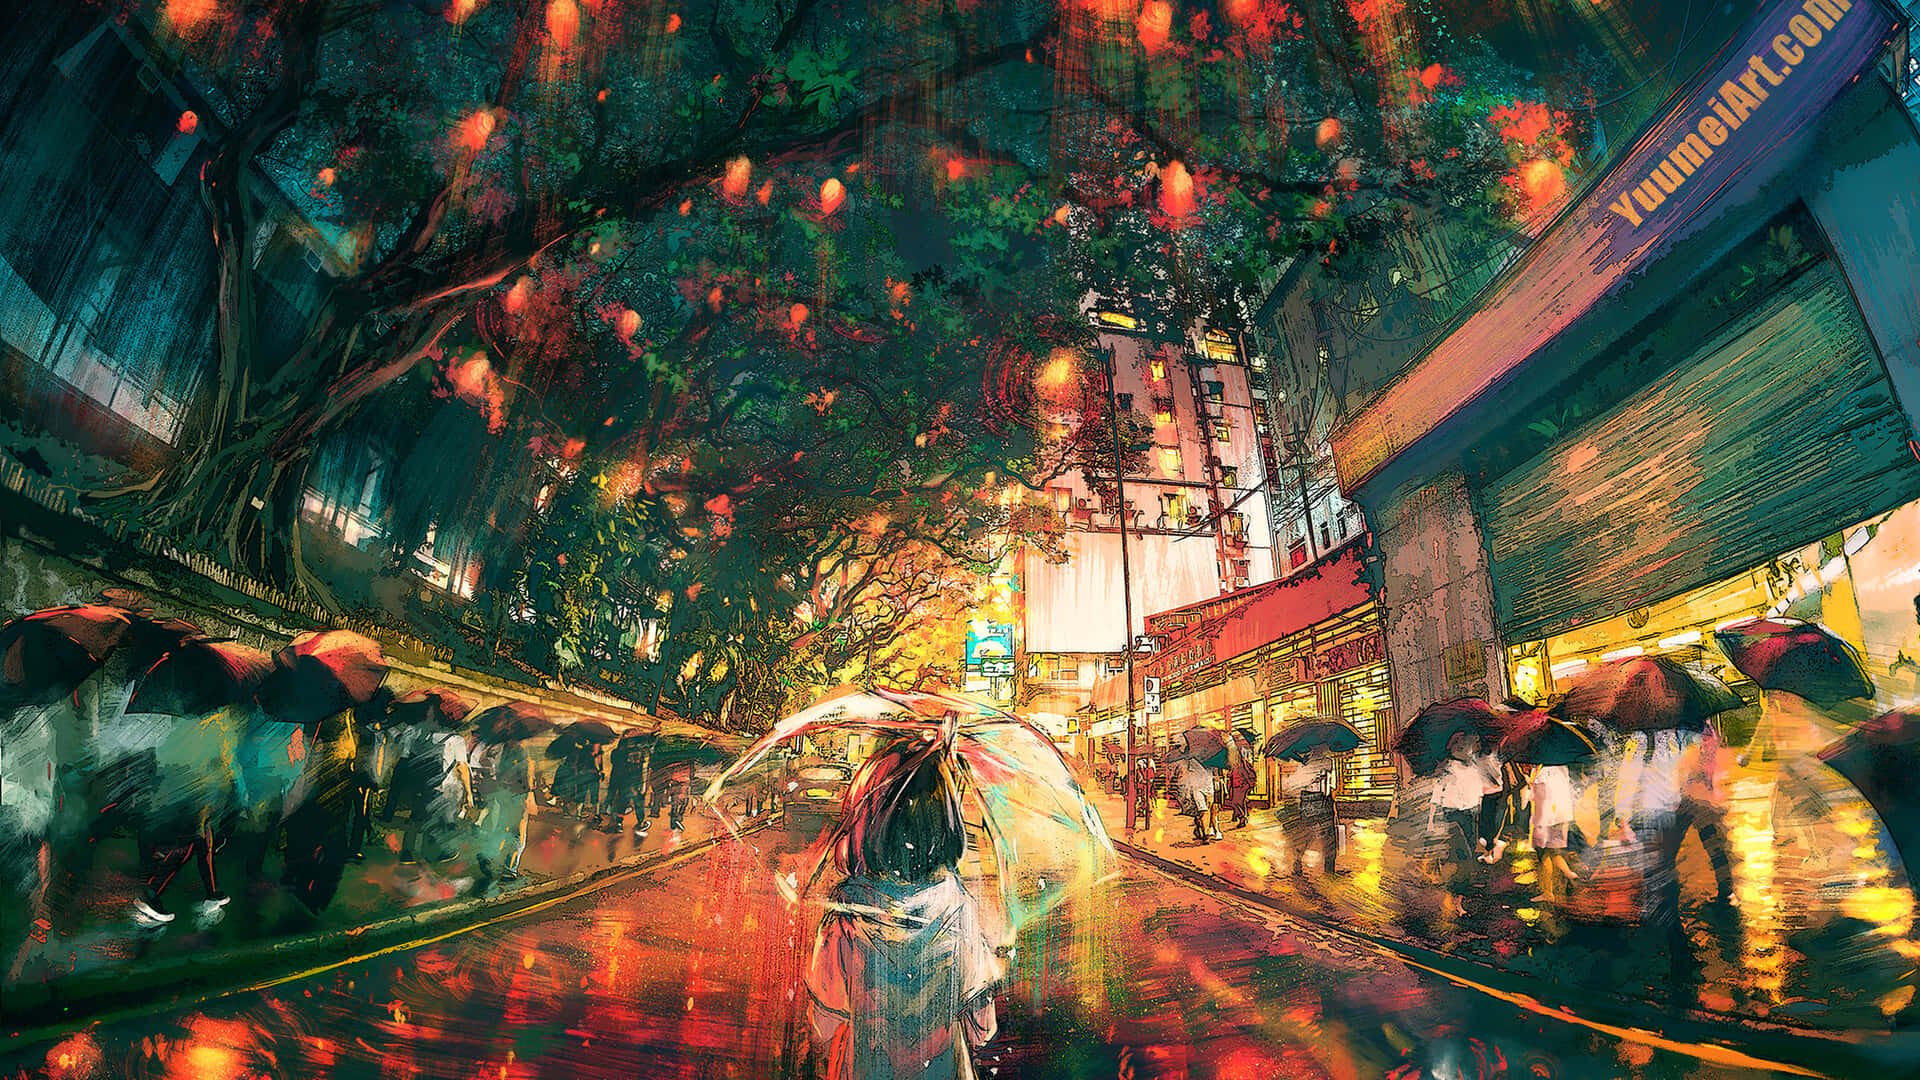 1440presehintergrund Av Yuumei Hong Kong-ljus